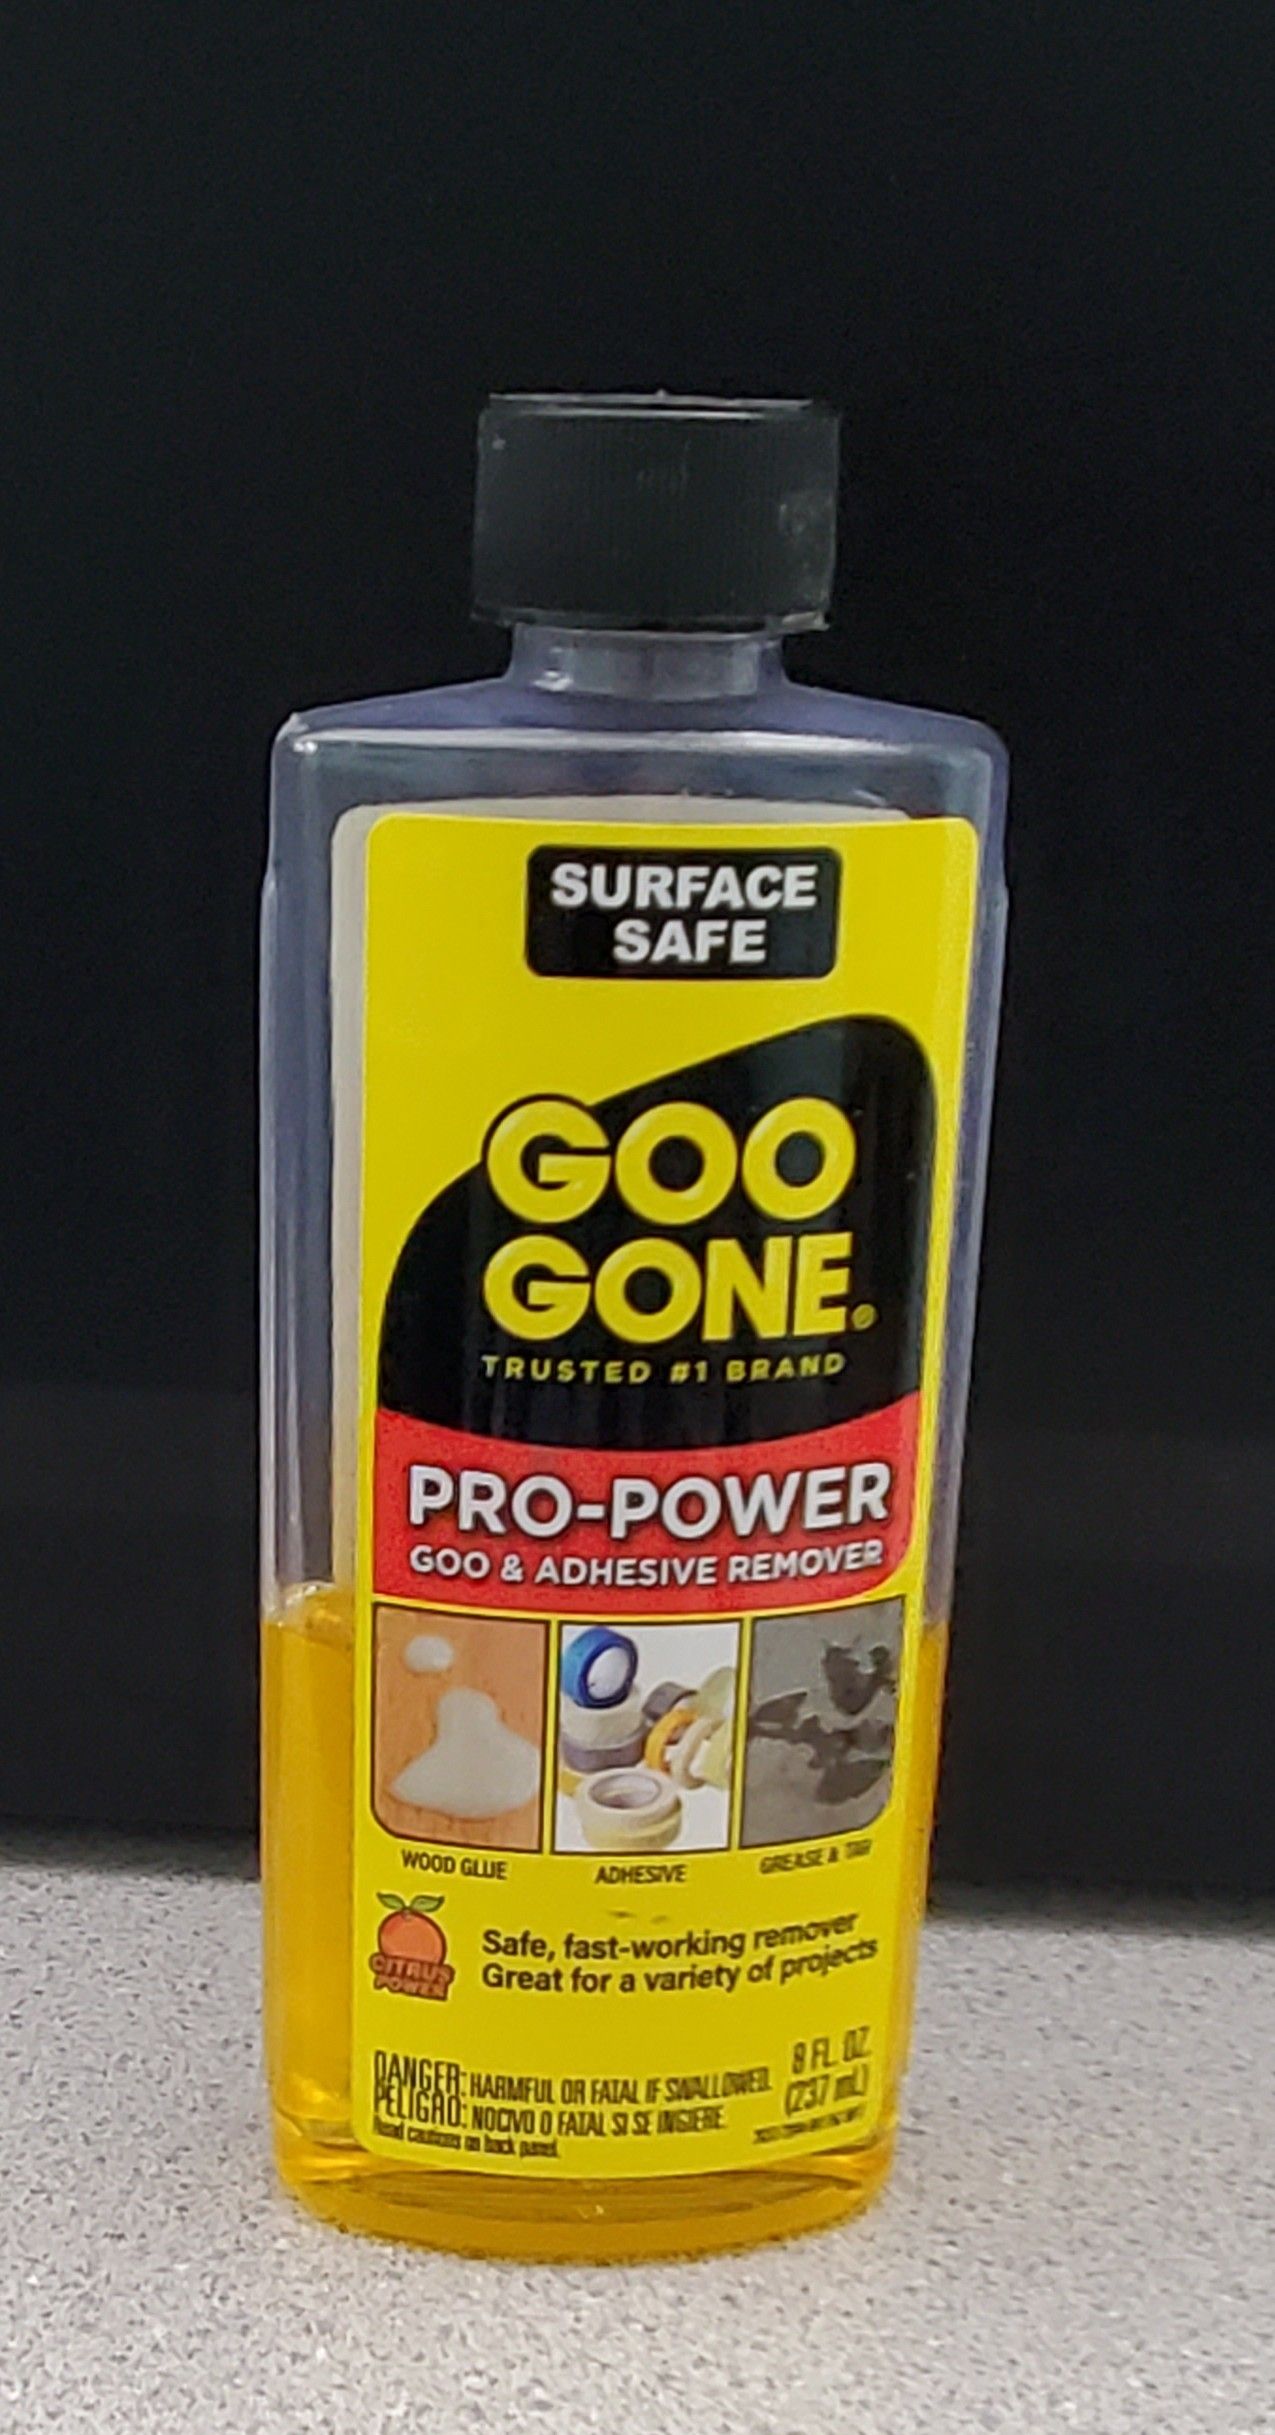 Goo Gone® Pro-Power Goo & Adhesive Remover - 8 oz. at Menards®